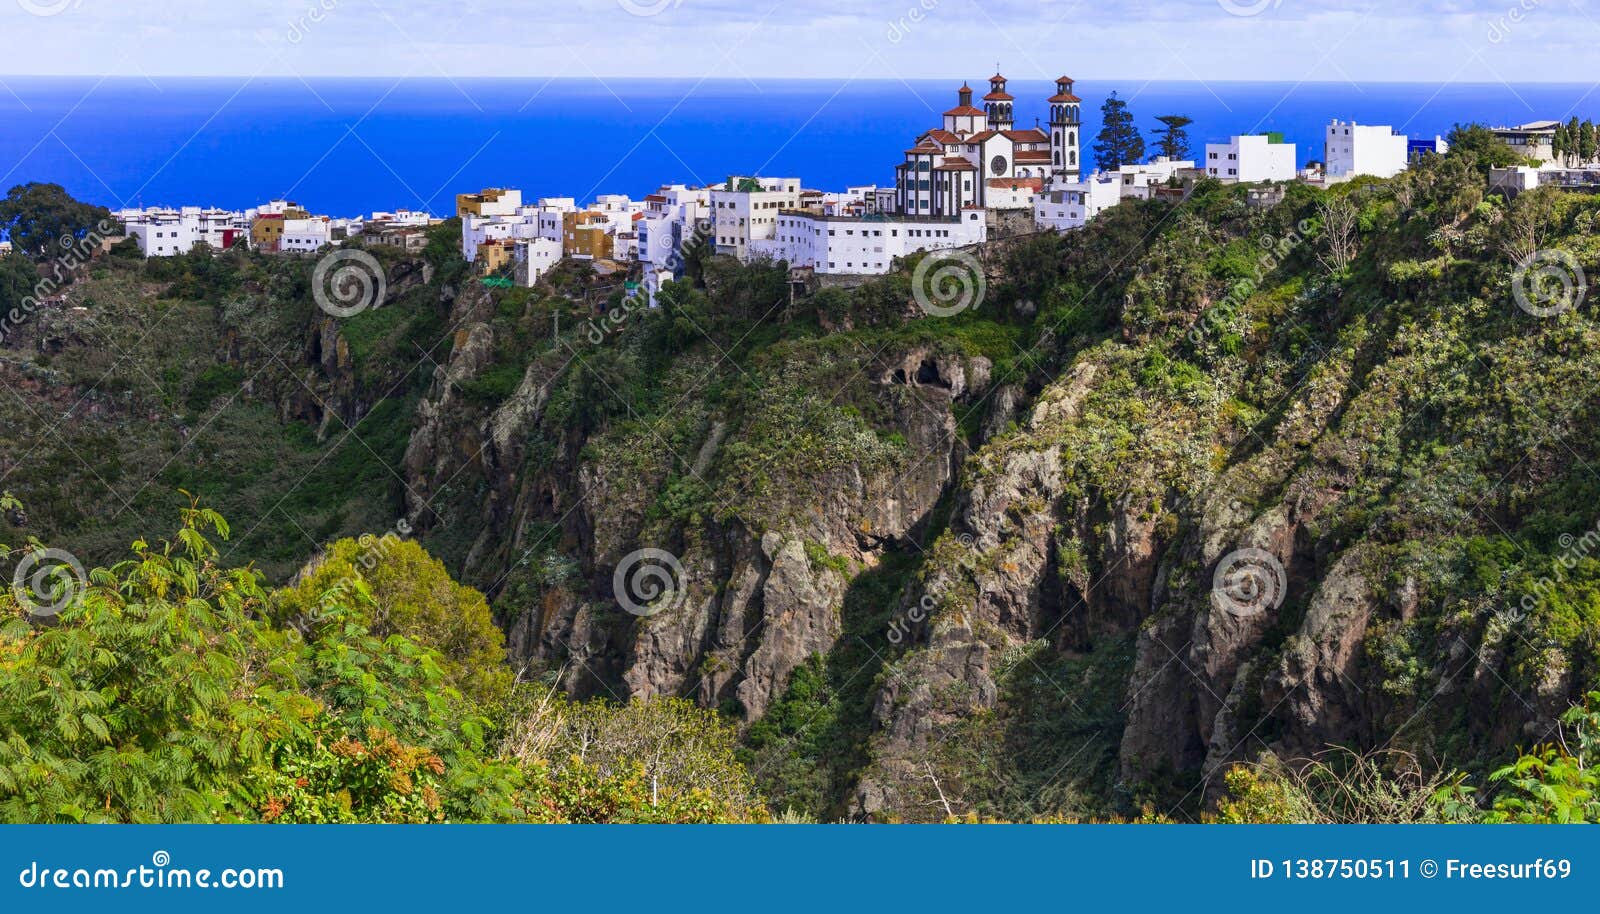 impressive mountain village moya over rocks - gran canaria, canary islands